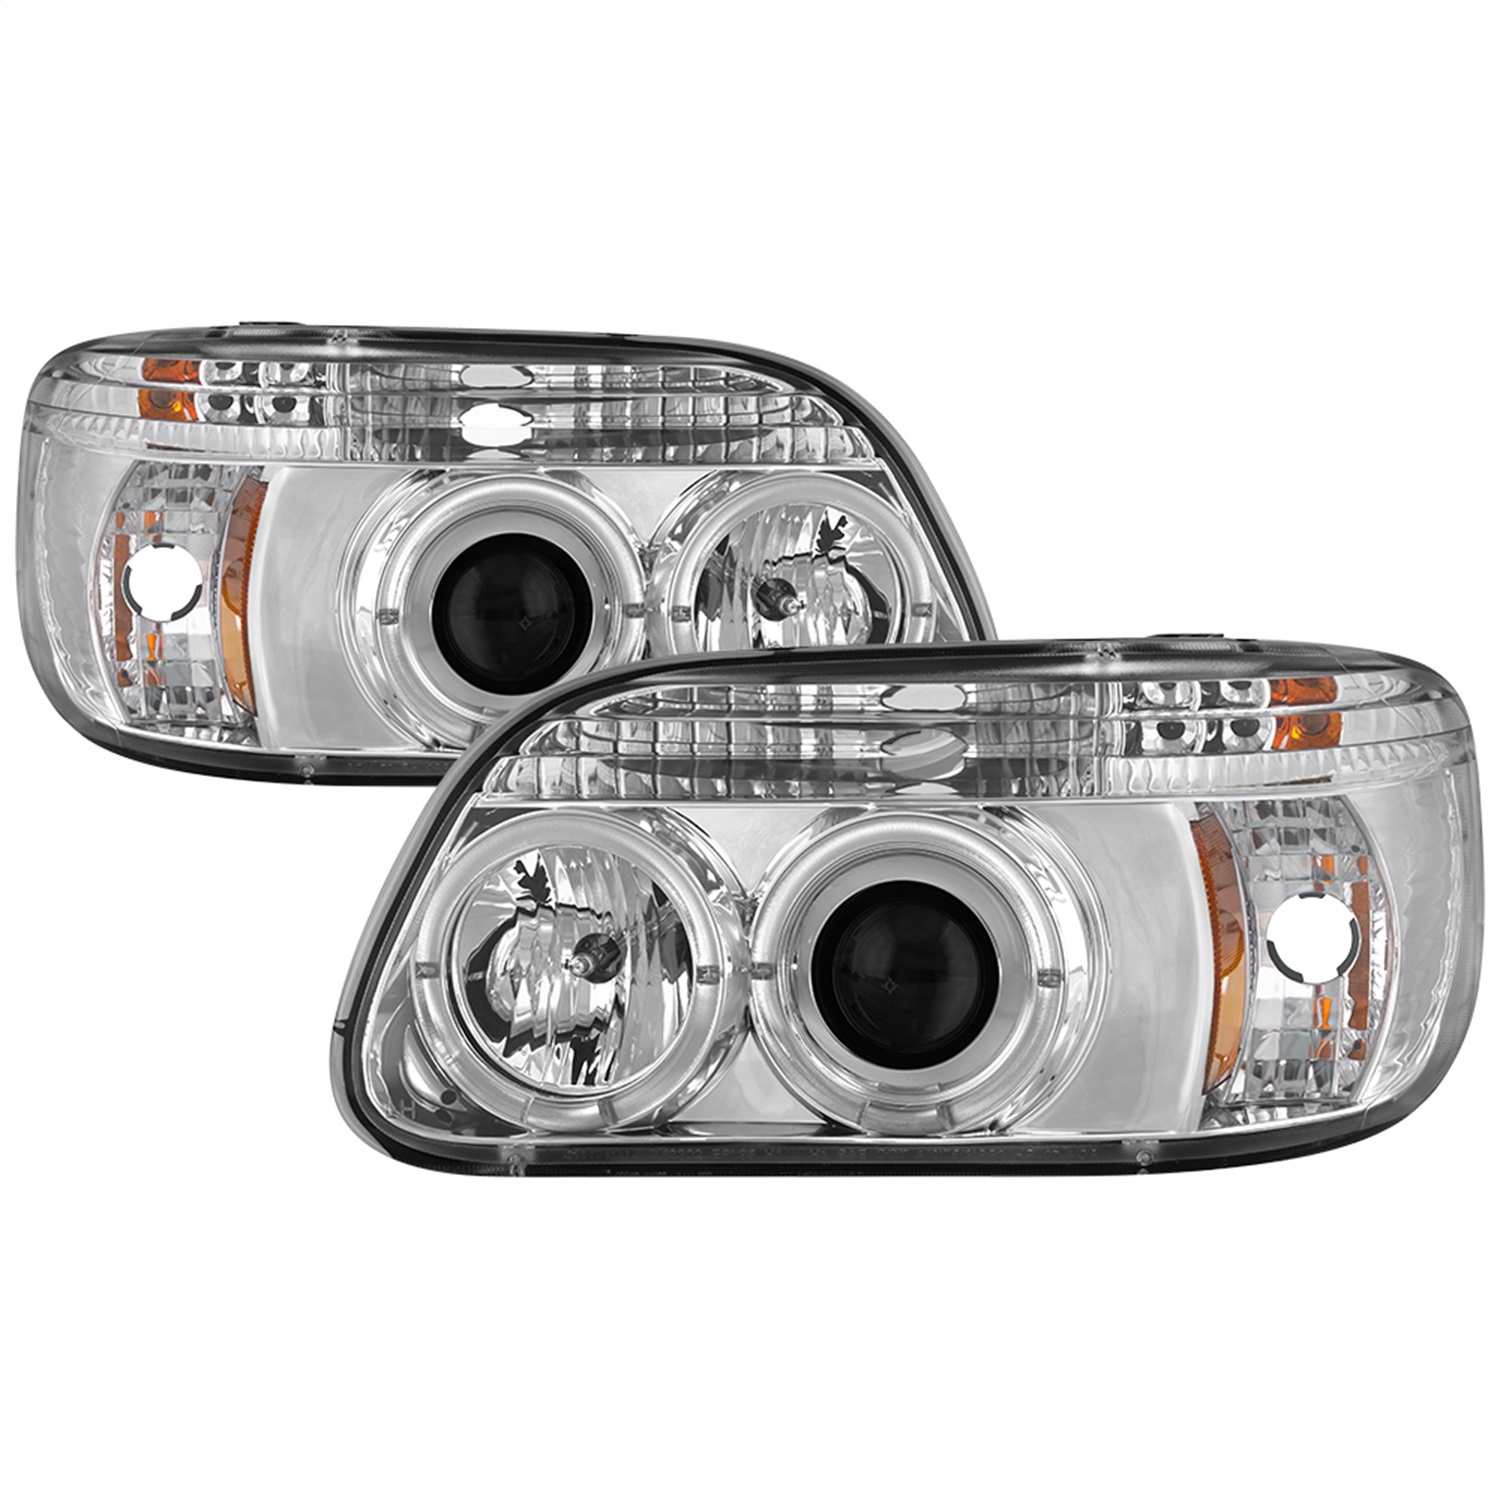 Spyder Auto 5010148 Halo Projector Headlights